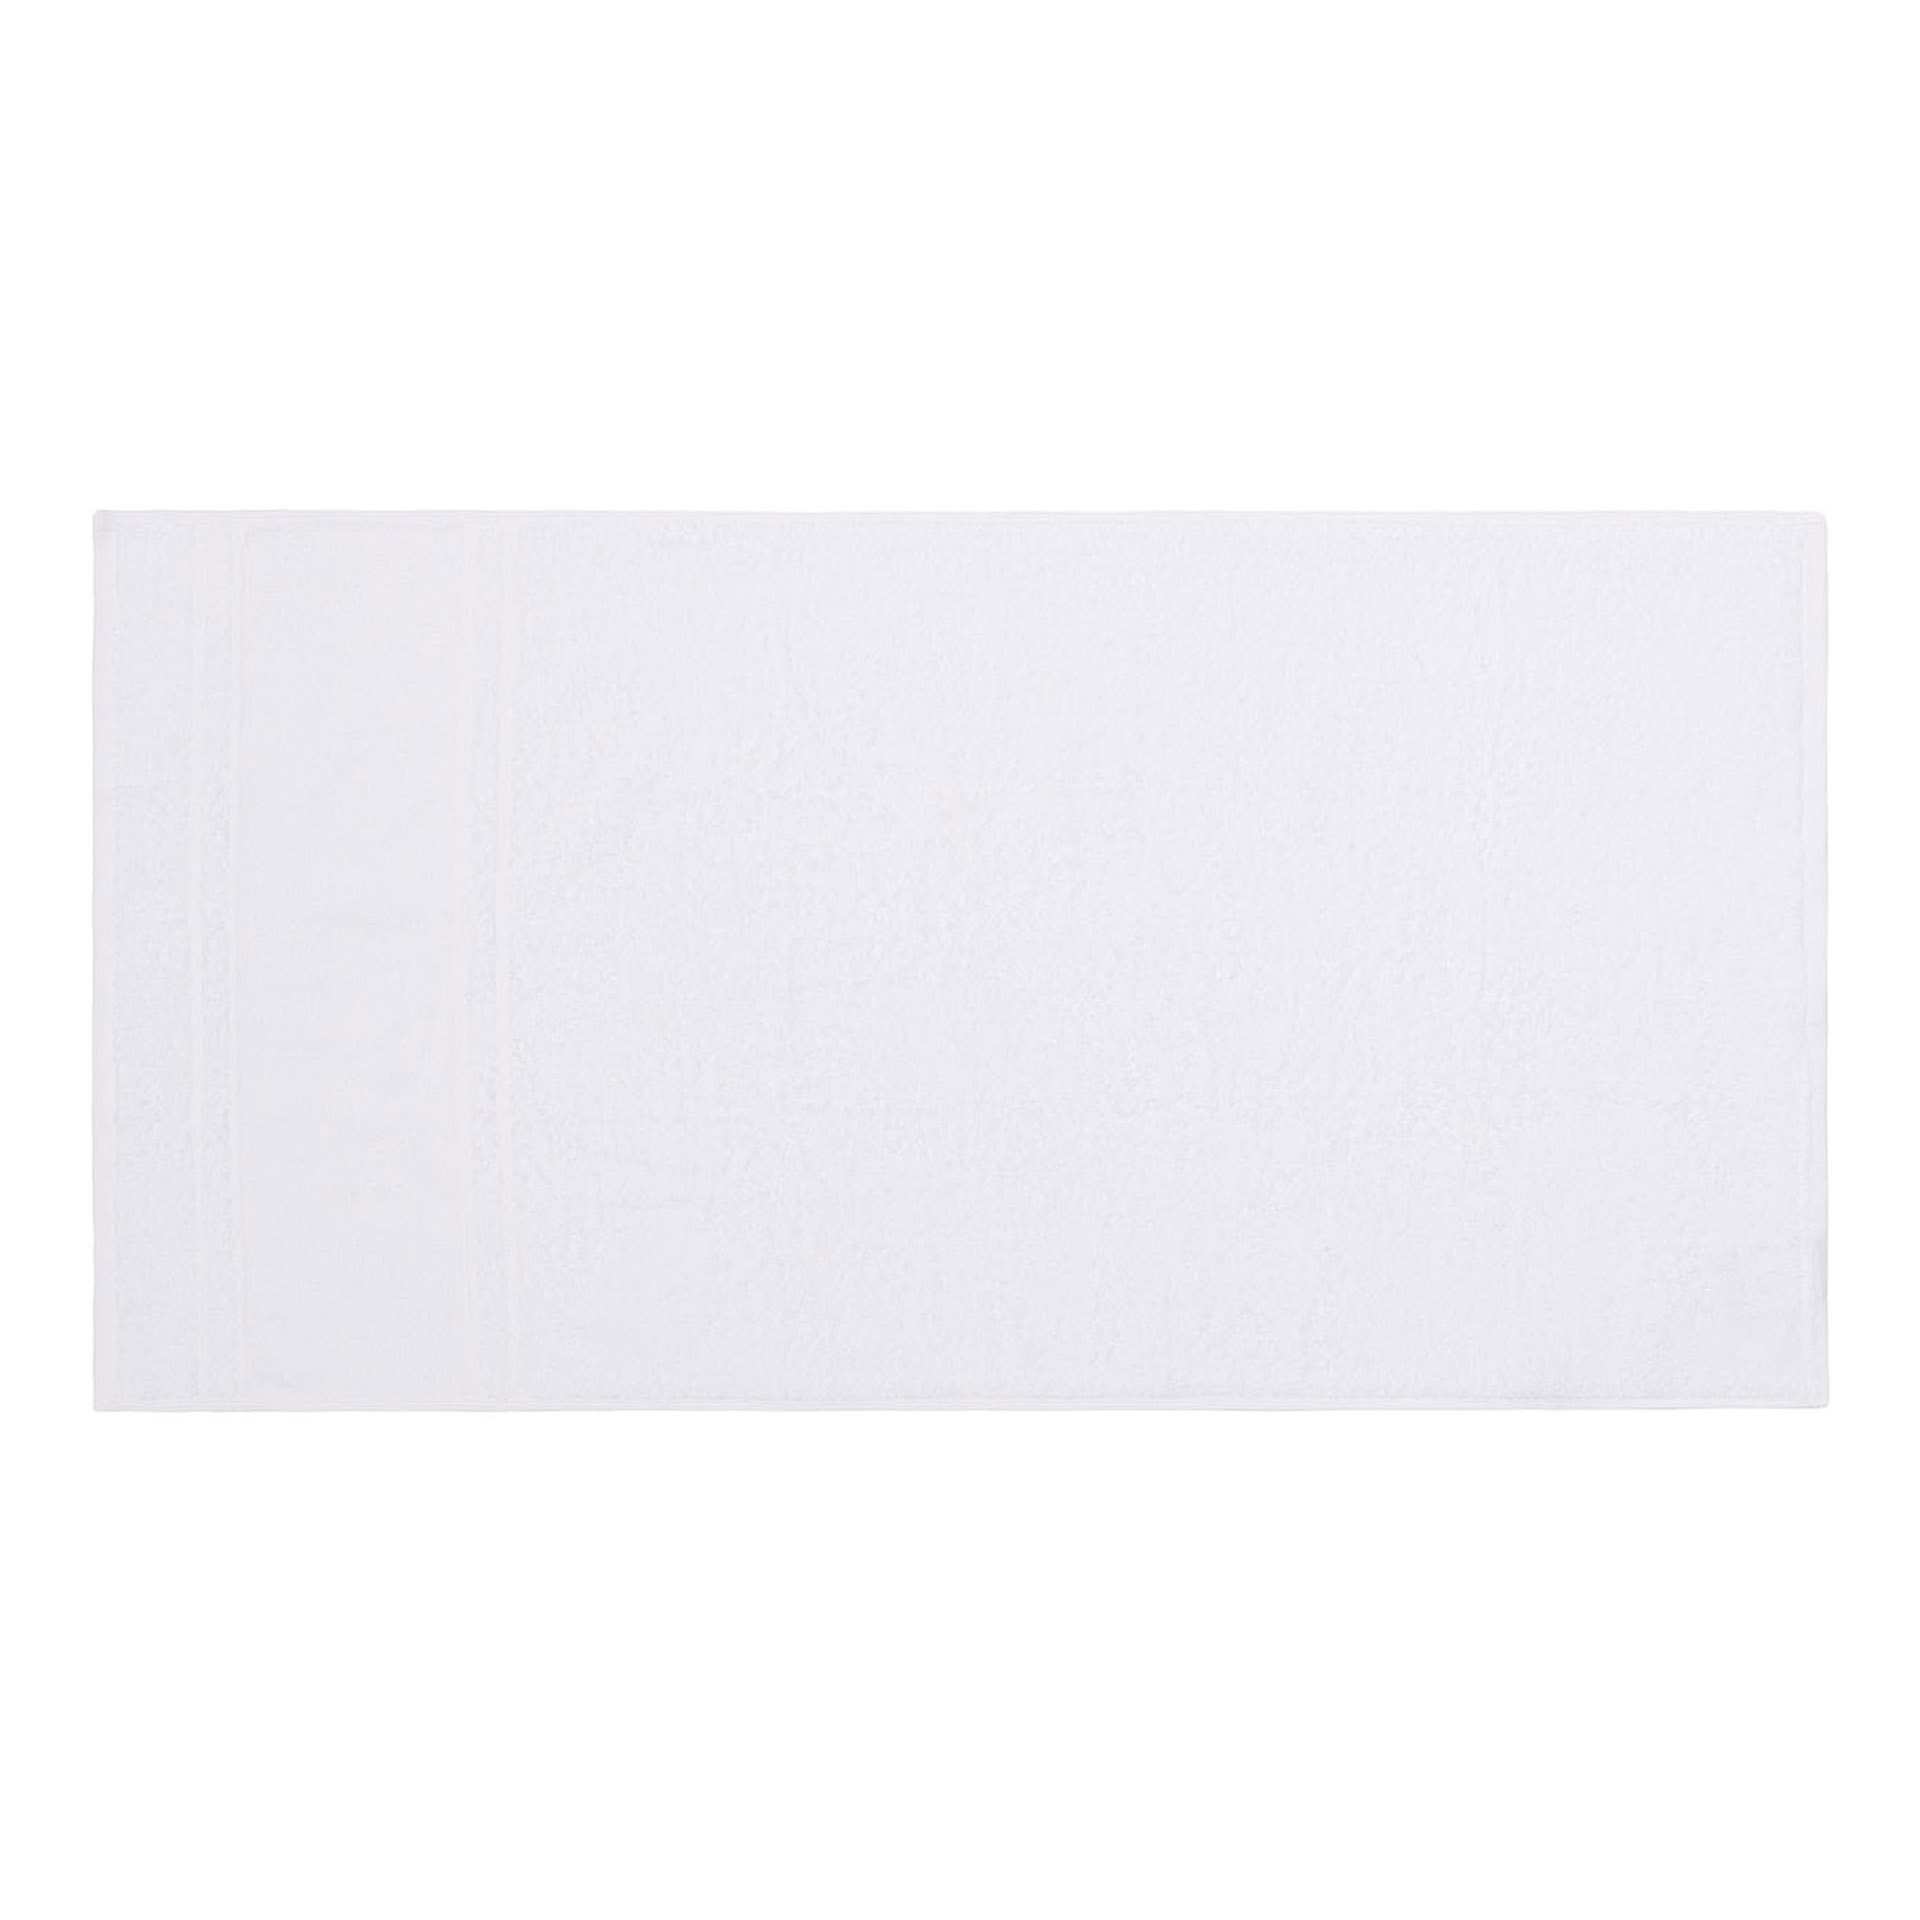 Bade-/ Saunatuch - Serie PORTO - weiß - Abm. 100 x 180 cm - Baumwolle - 200001-9-00-D